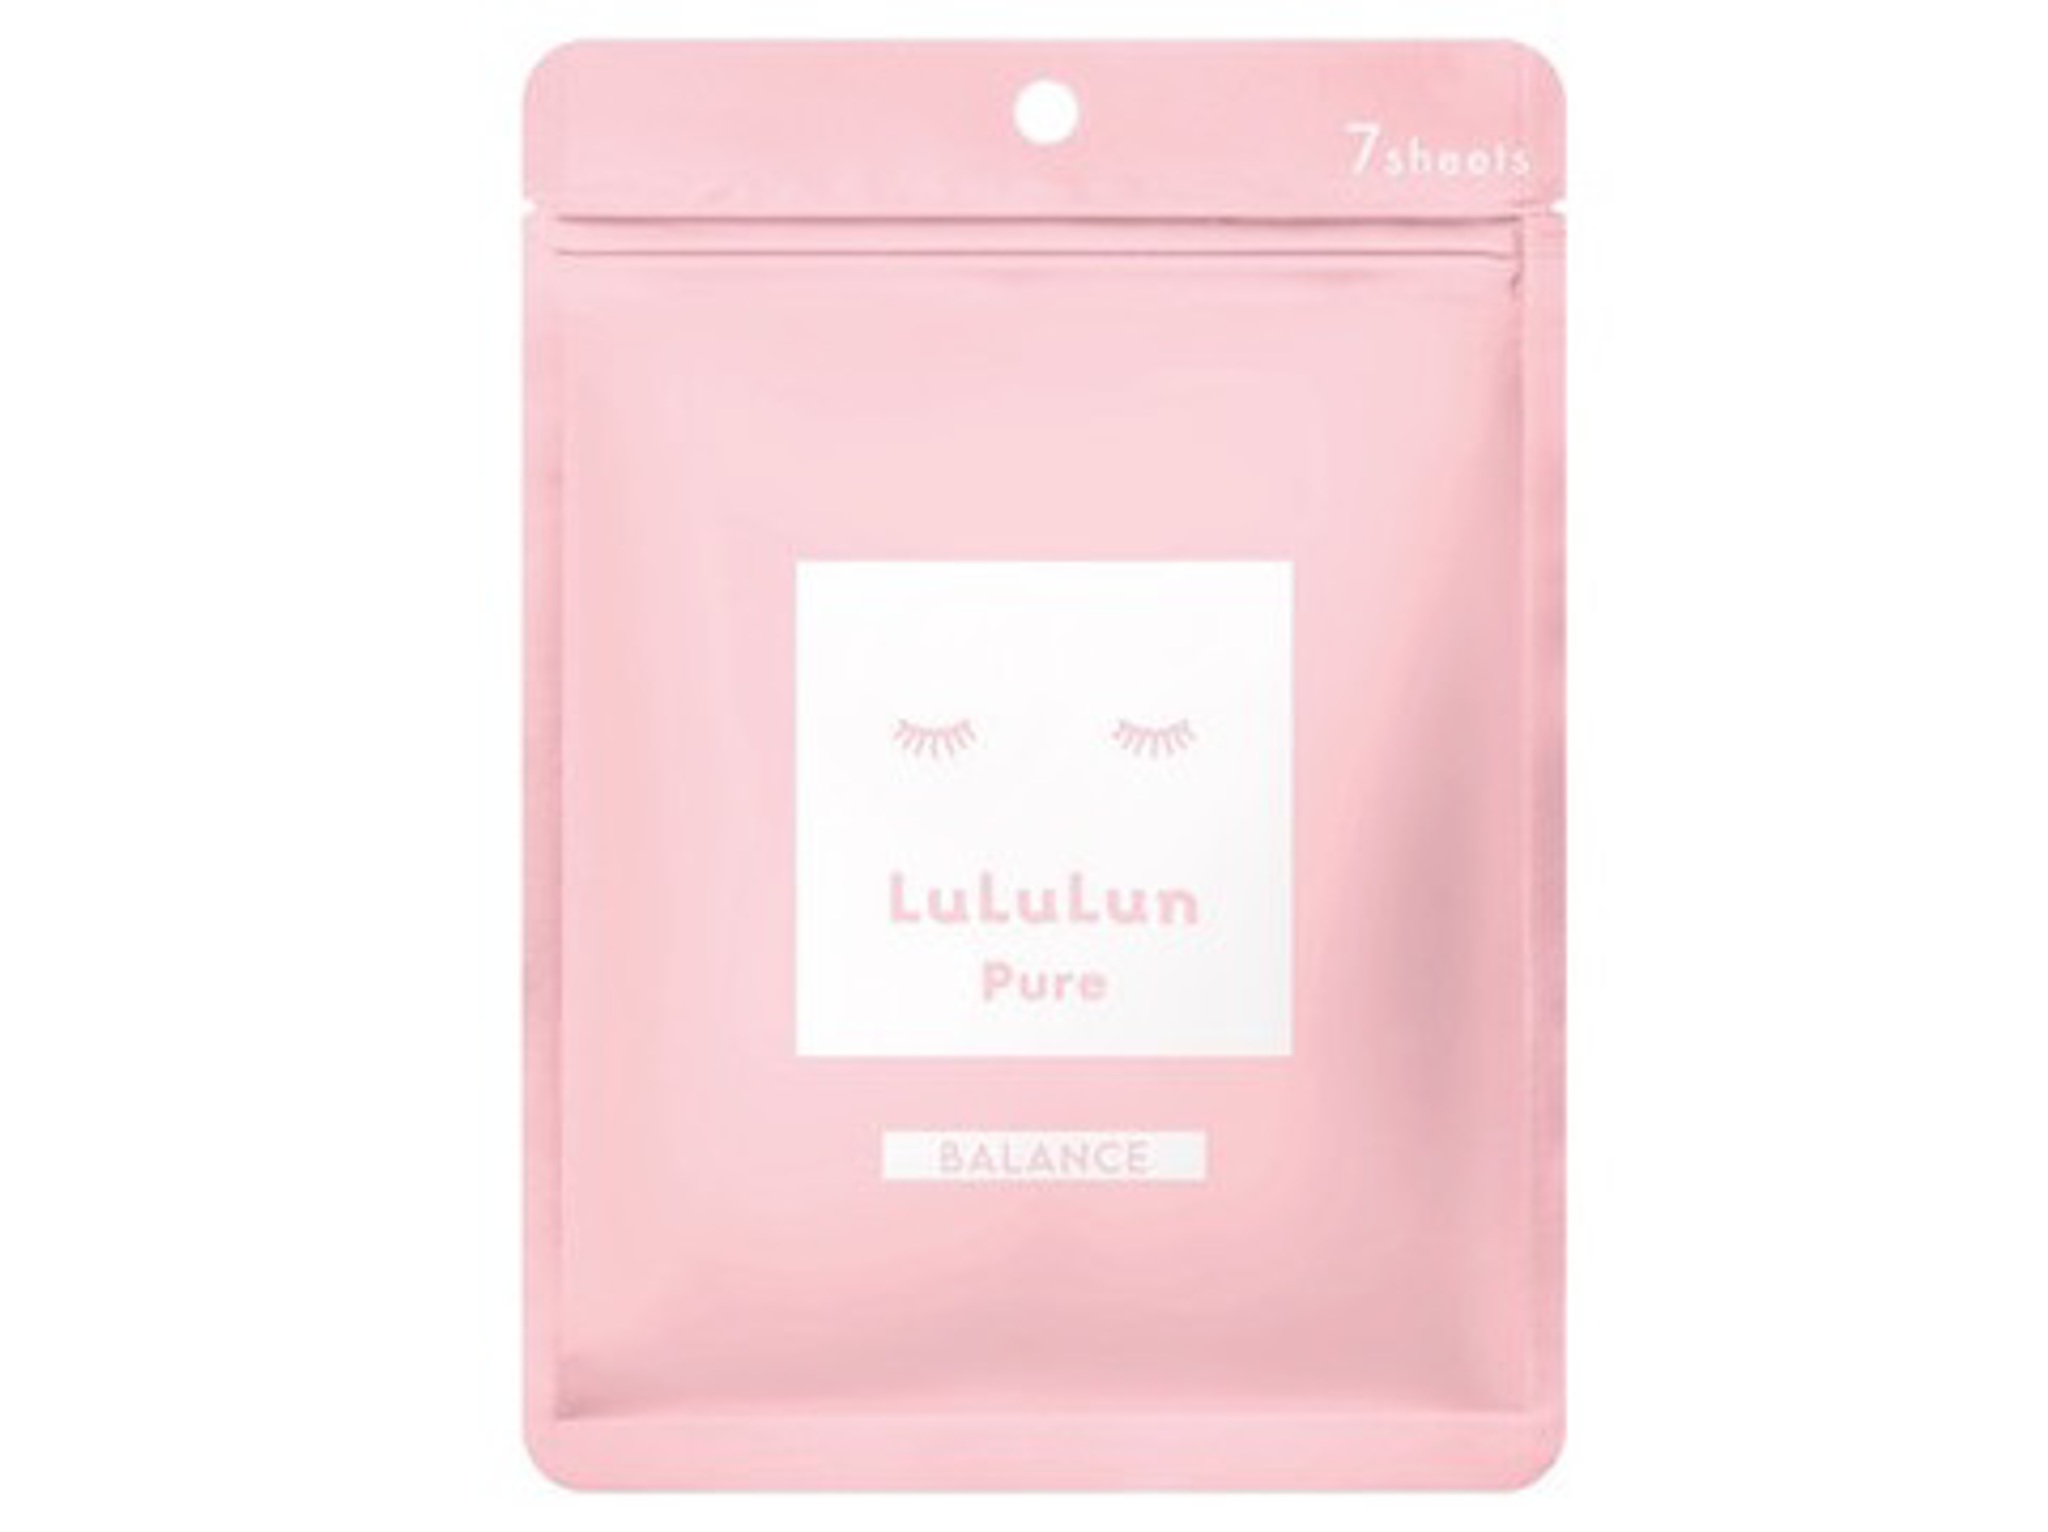 LuLuLun - Face Mask [Pure Series] - Balance (Pink) - 7 sheets 1316